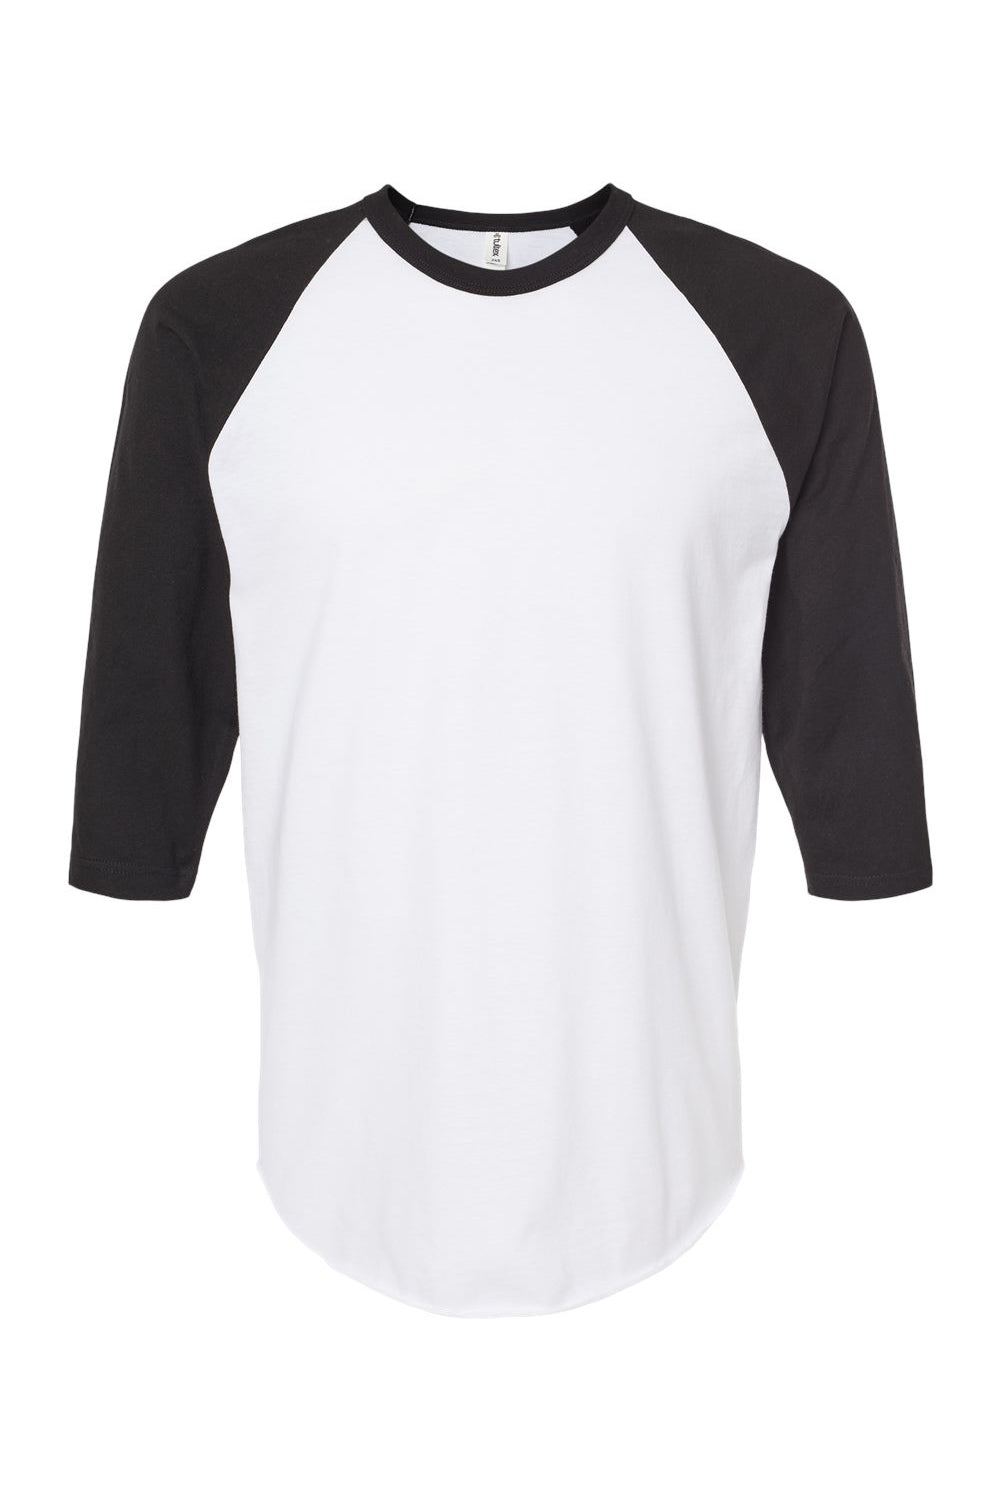 Tultex 245 Mens Fine Jersey Raglan 3/4 Sleeve Crewneck T-Shirt White/Black Flat Front